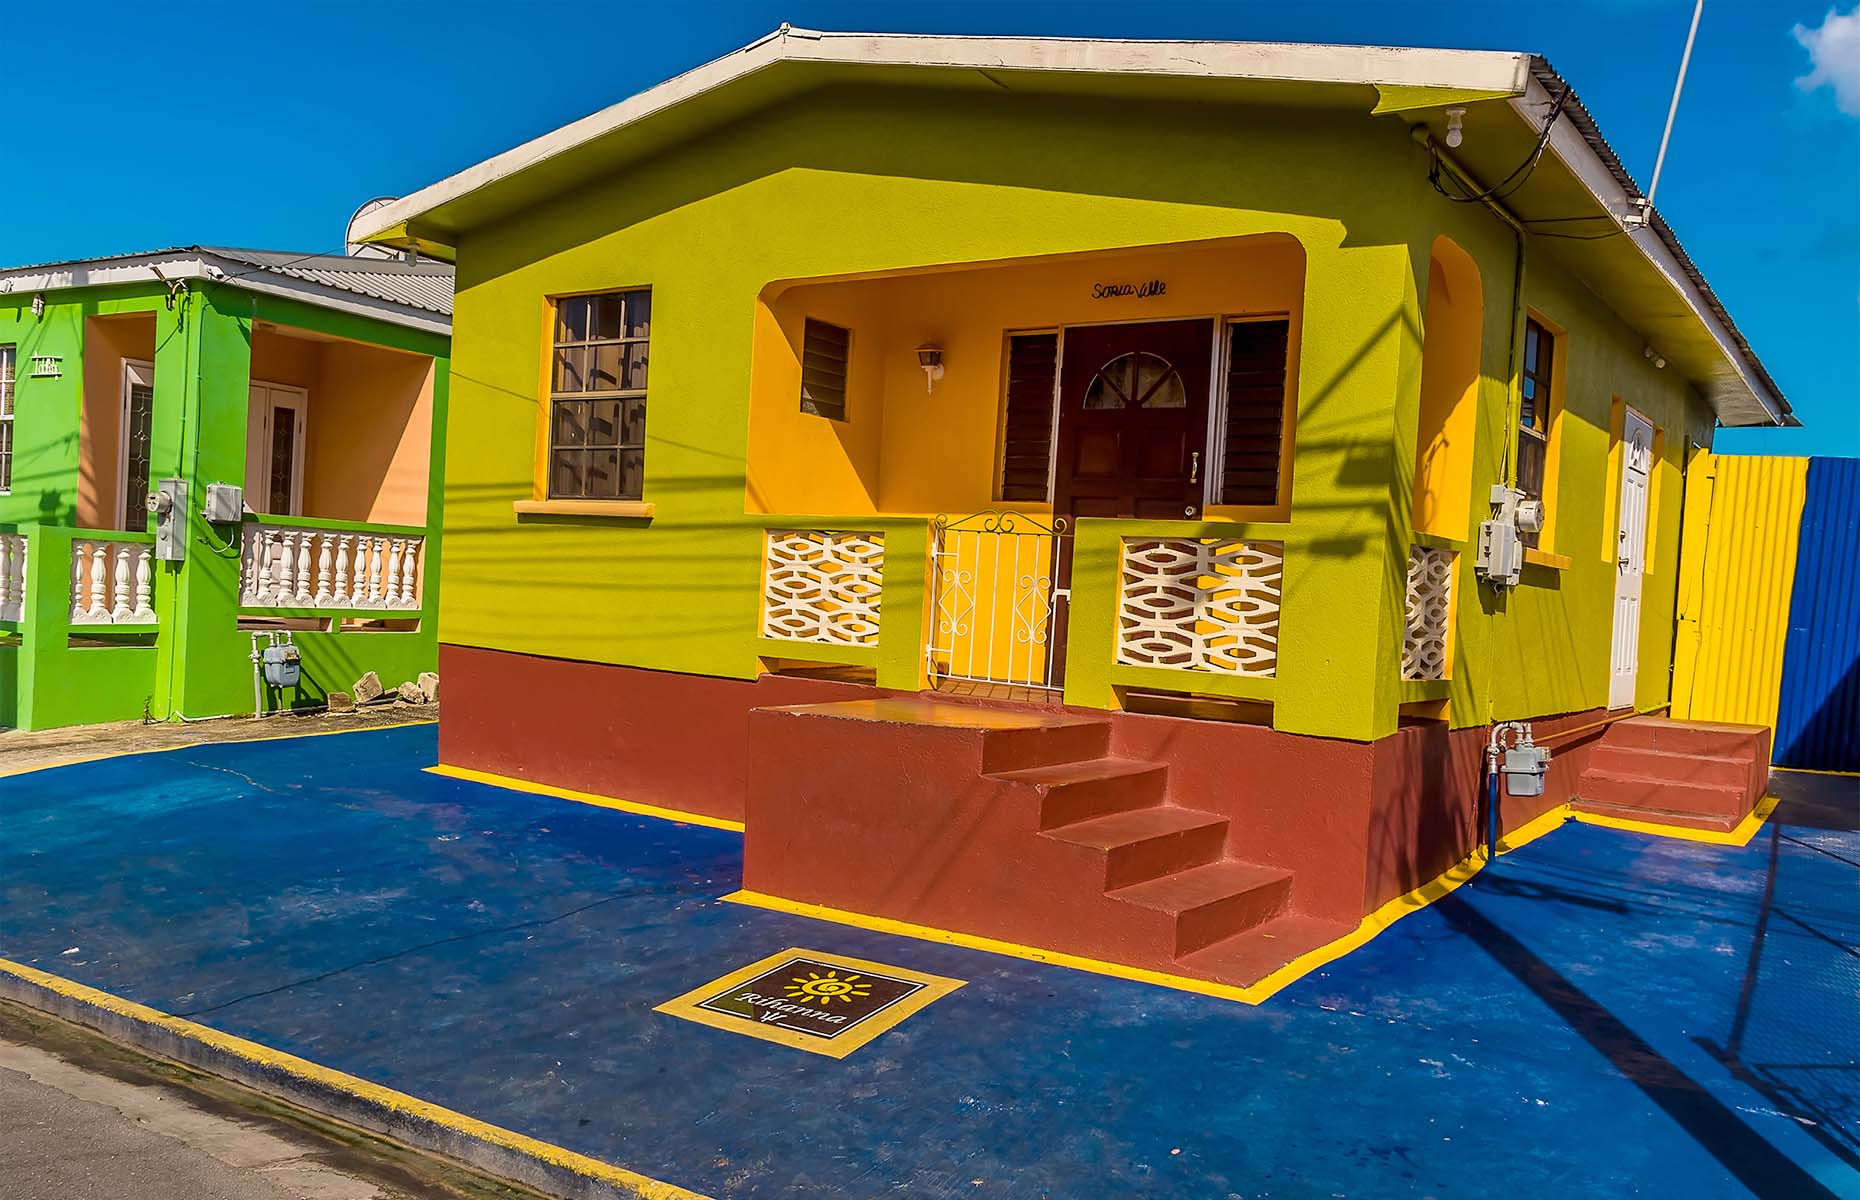 Rihanna's childhood home, Bridgetown, Barbados. (Image: Nicola Pulham/Shutterstock)